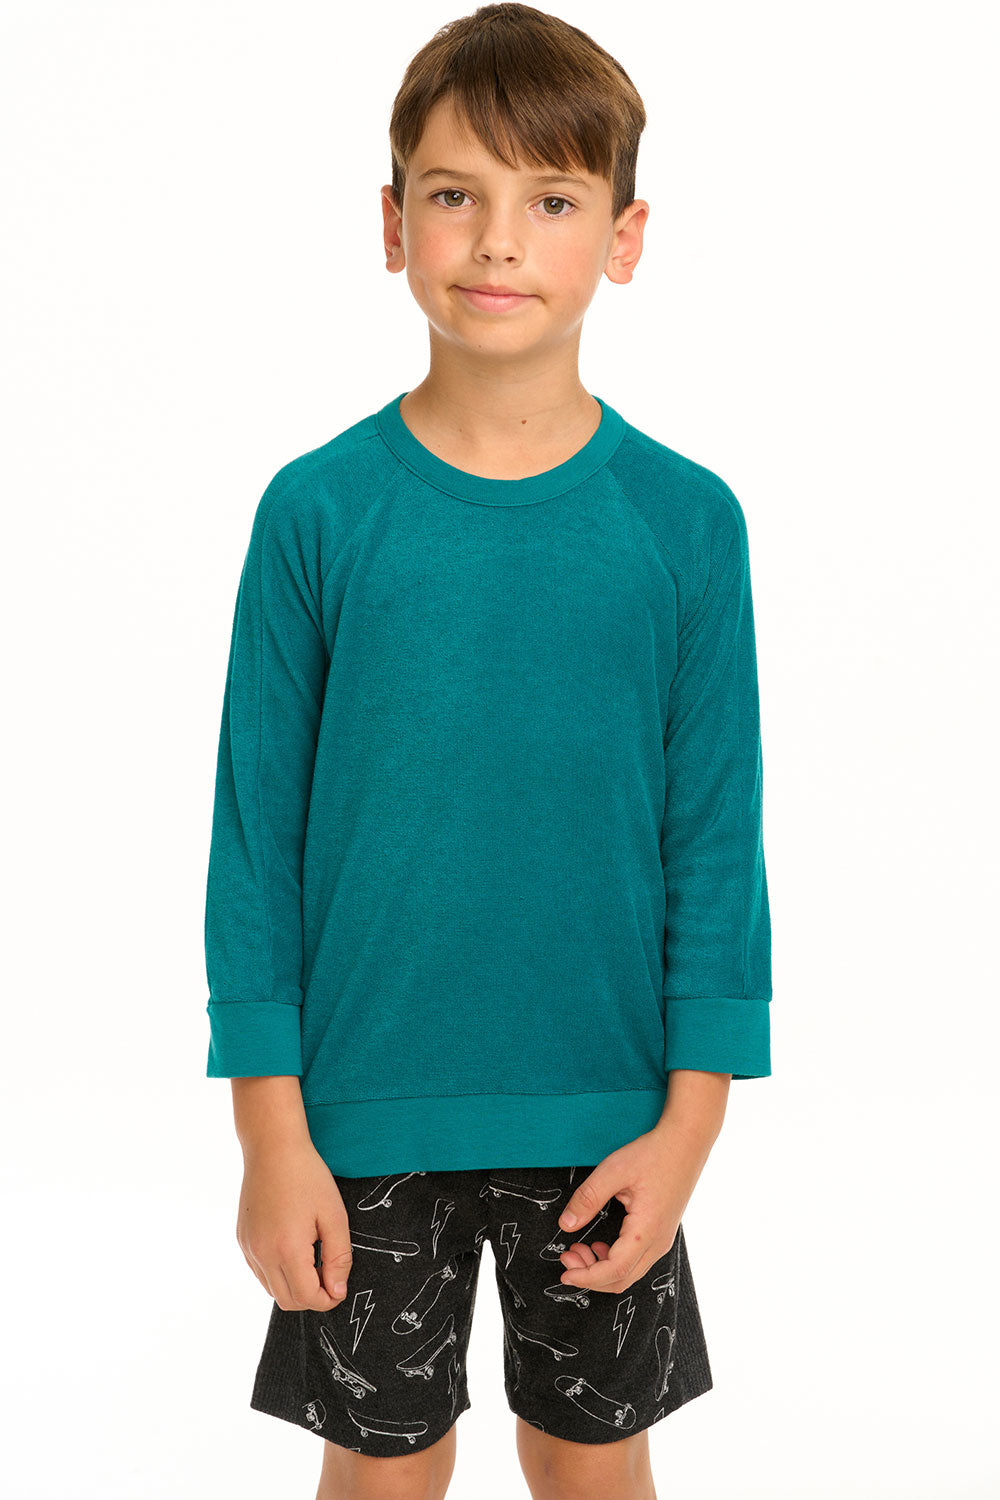 Boy's Lake Green Raglan Pullover BOYS chaserbrand